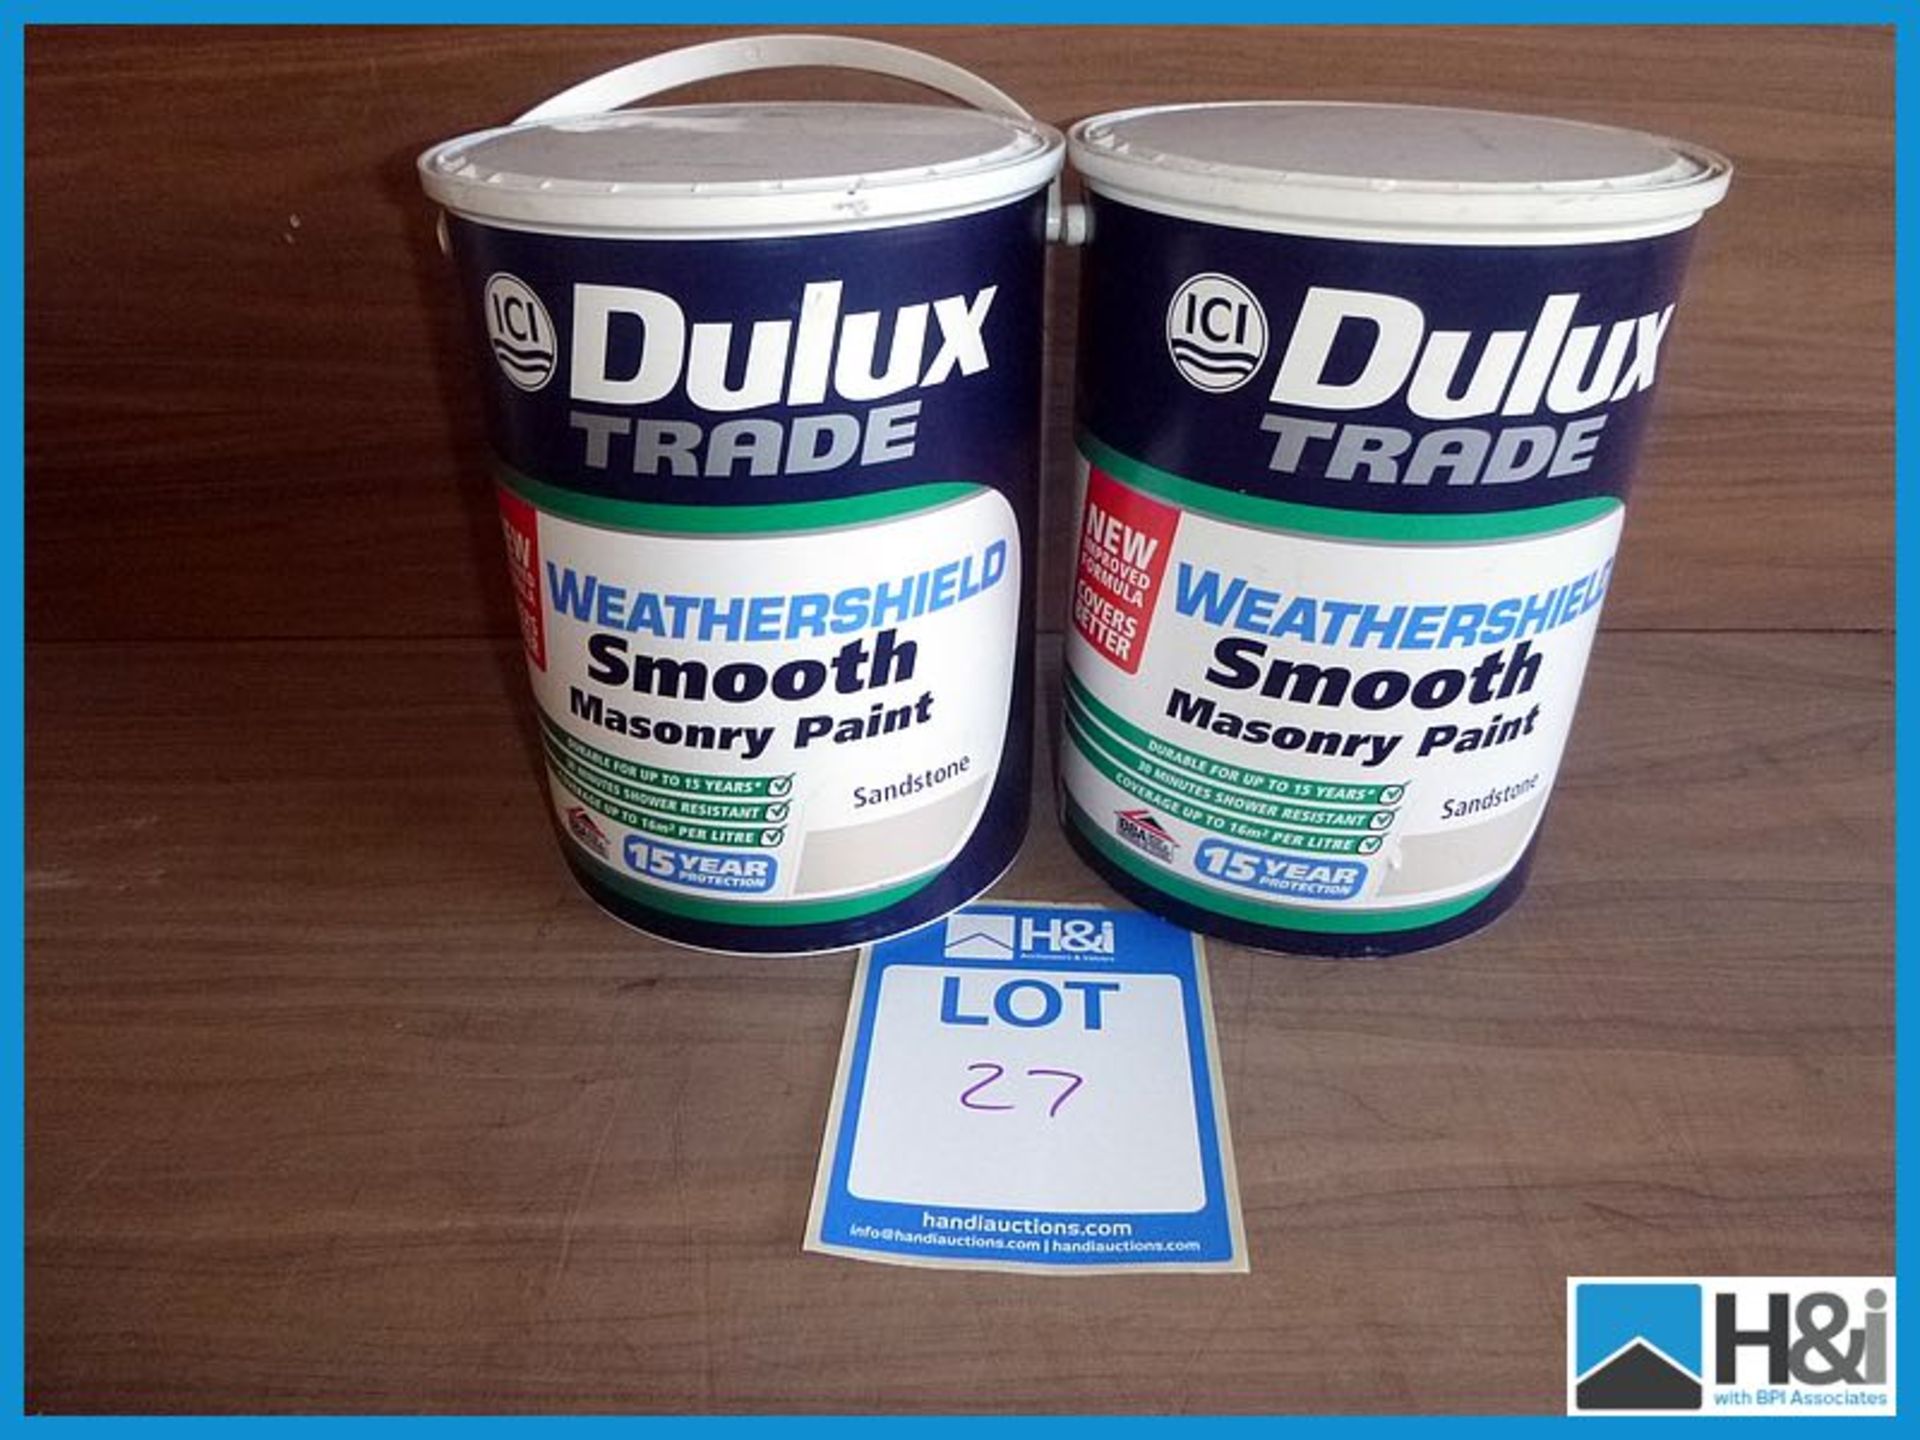 2 off - Dulux Trade Weathershield Smooth Masonry Paint, Sandstone, 5 litres, unused Appraisal: